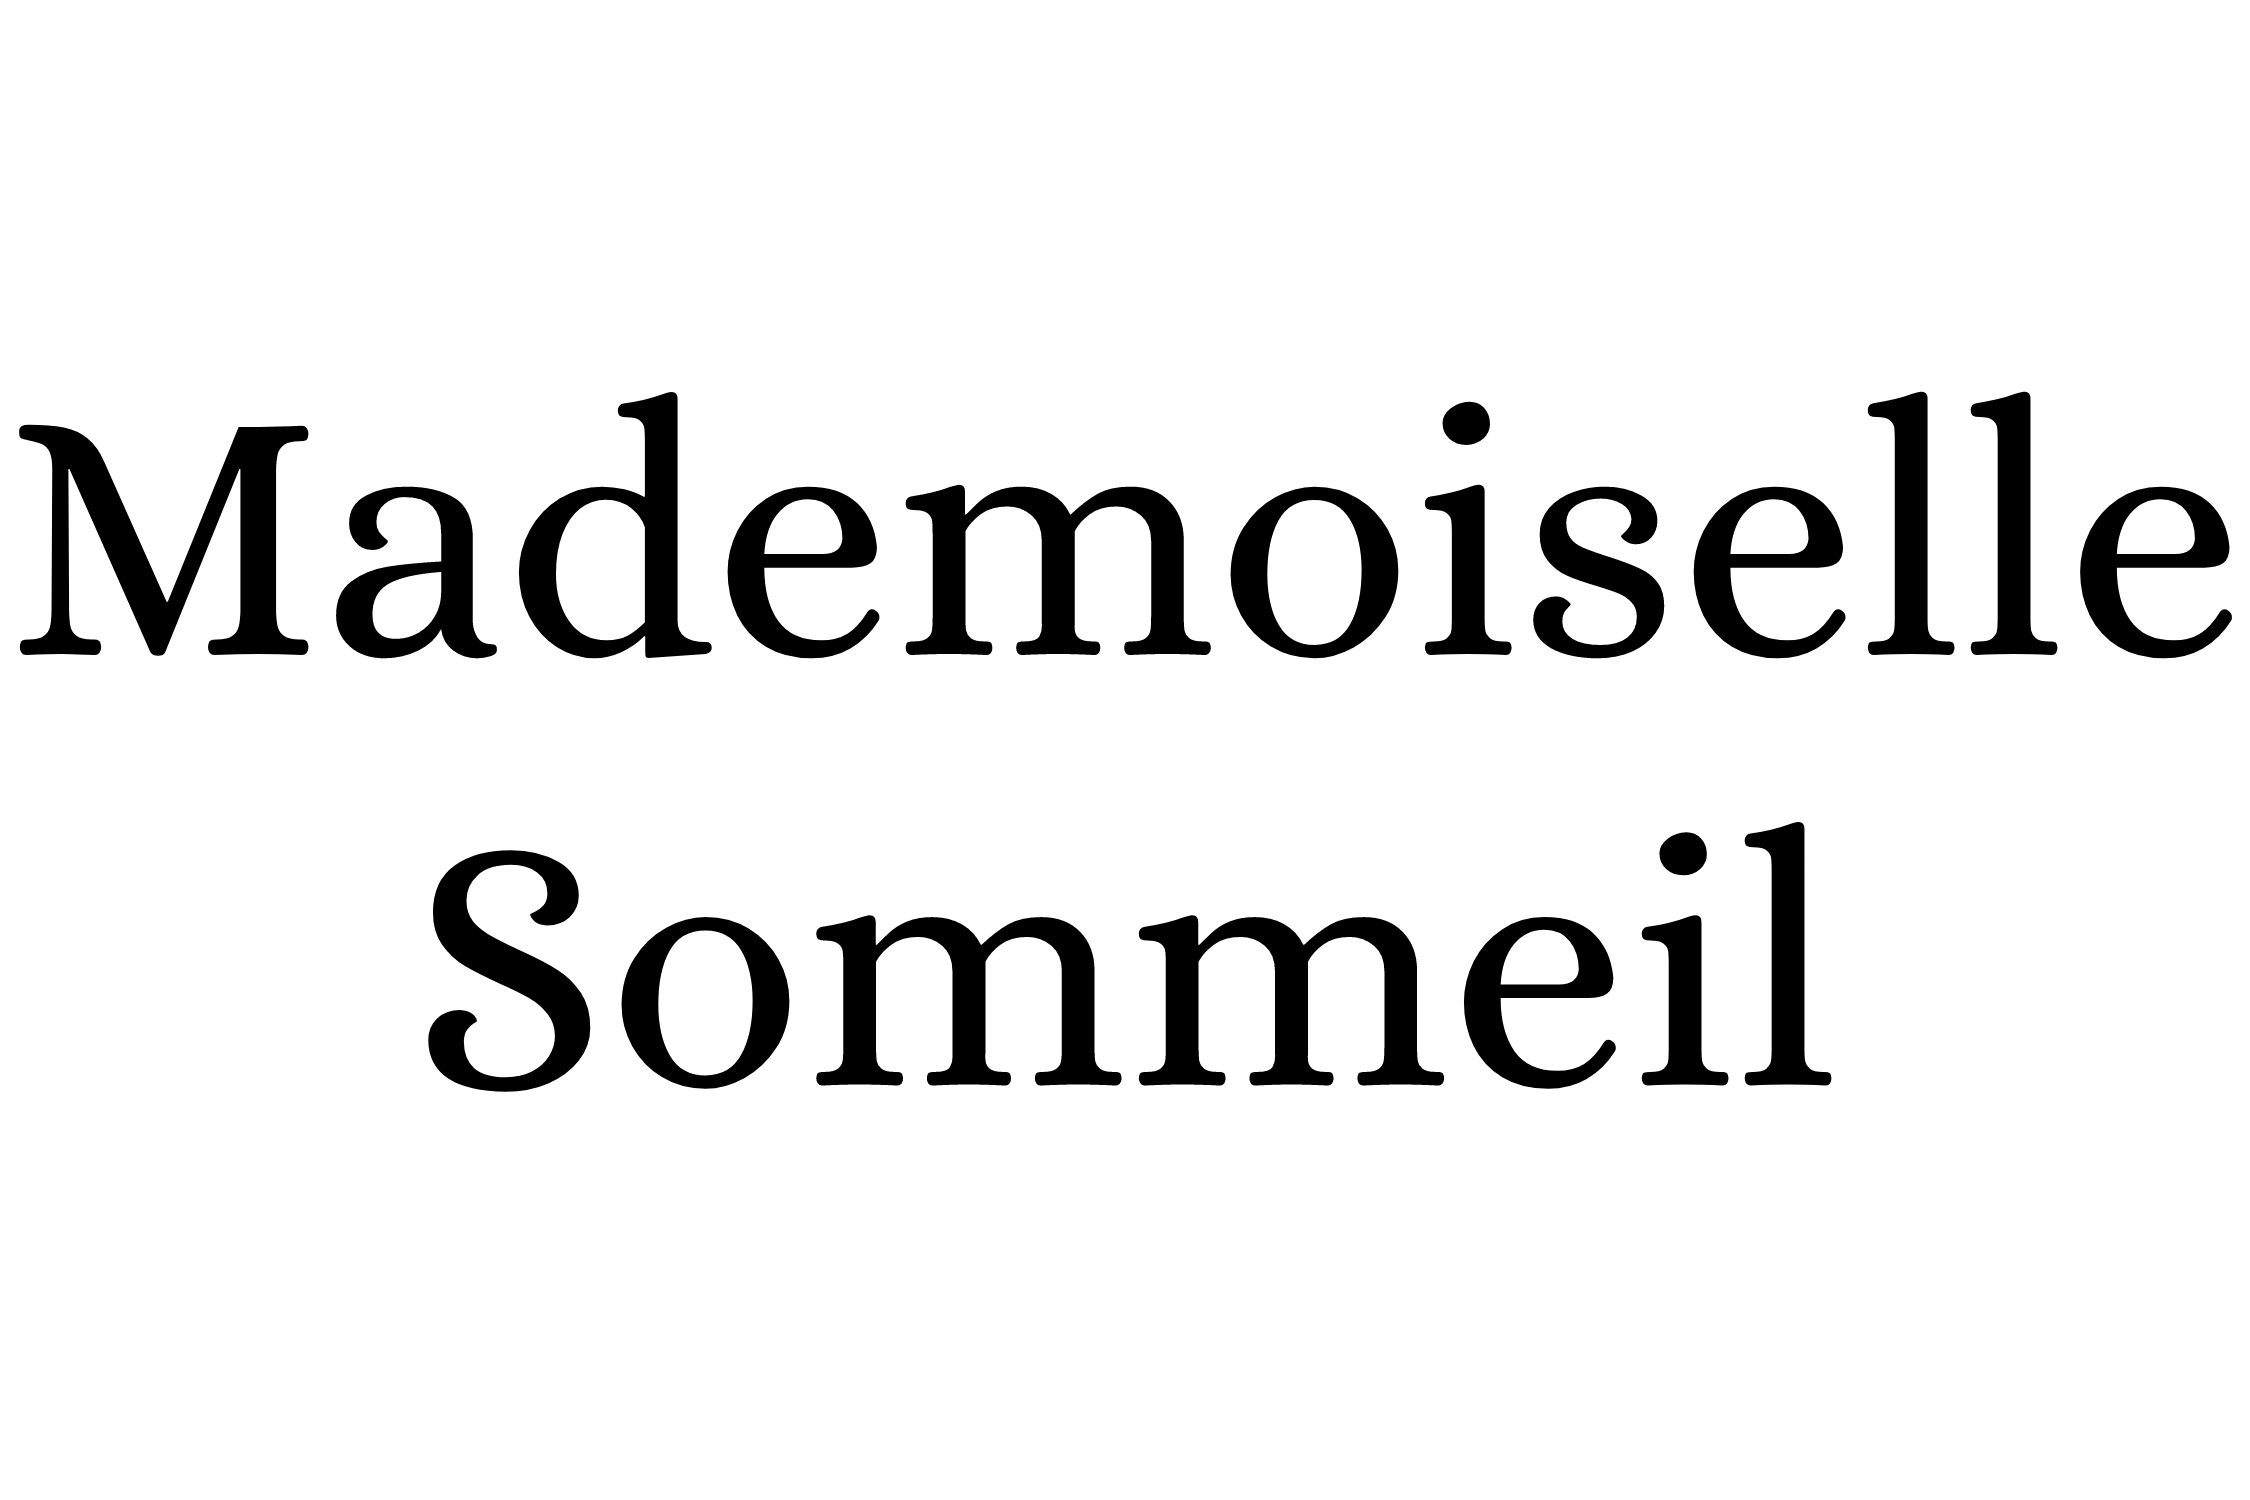 Mademoiselle Sommeil